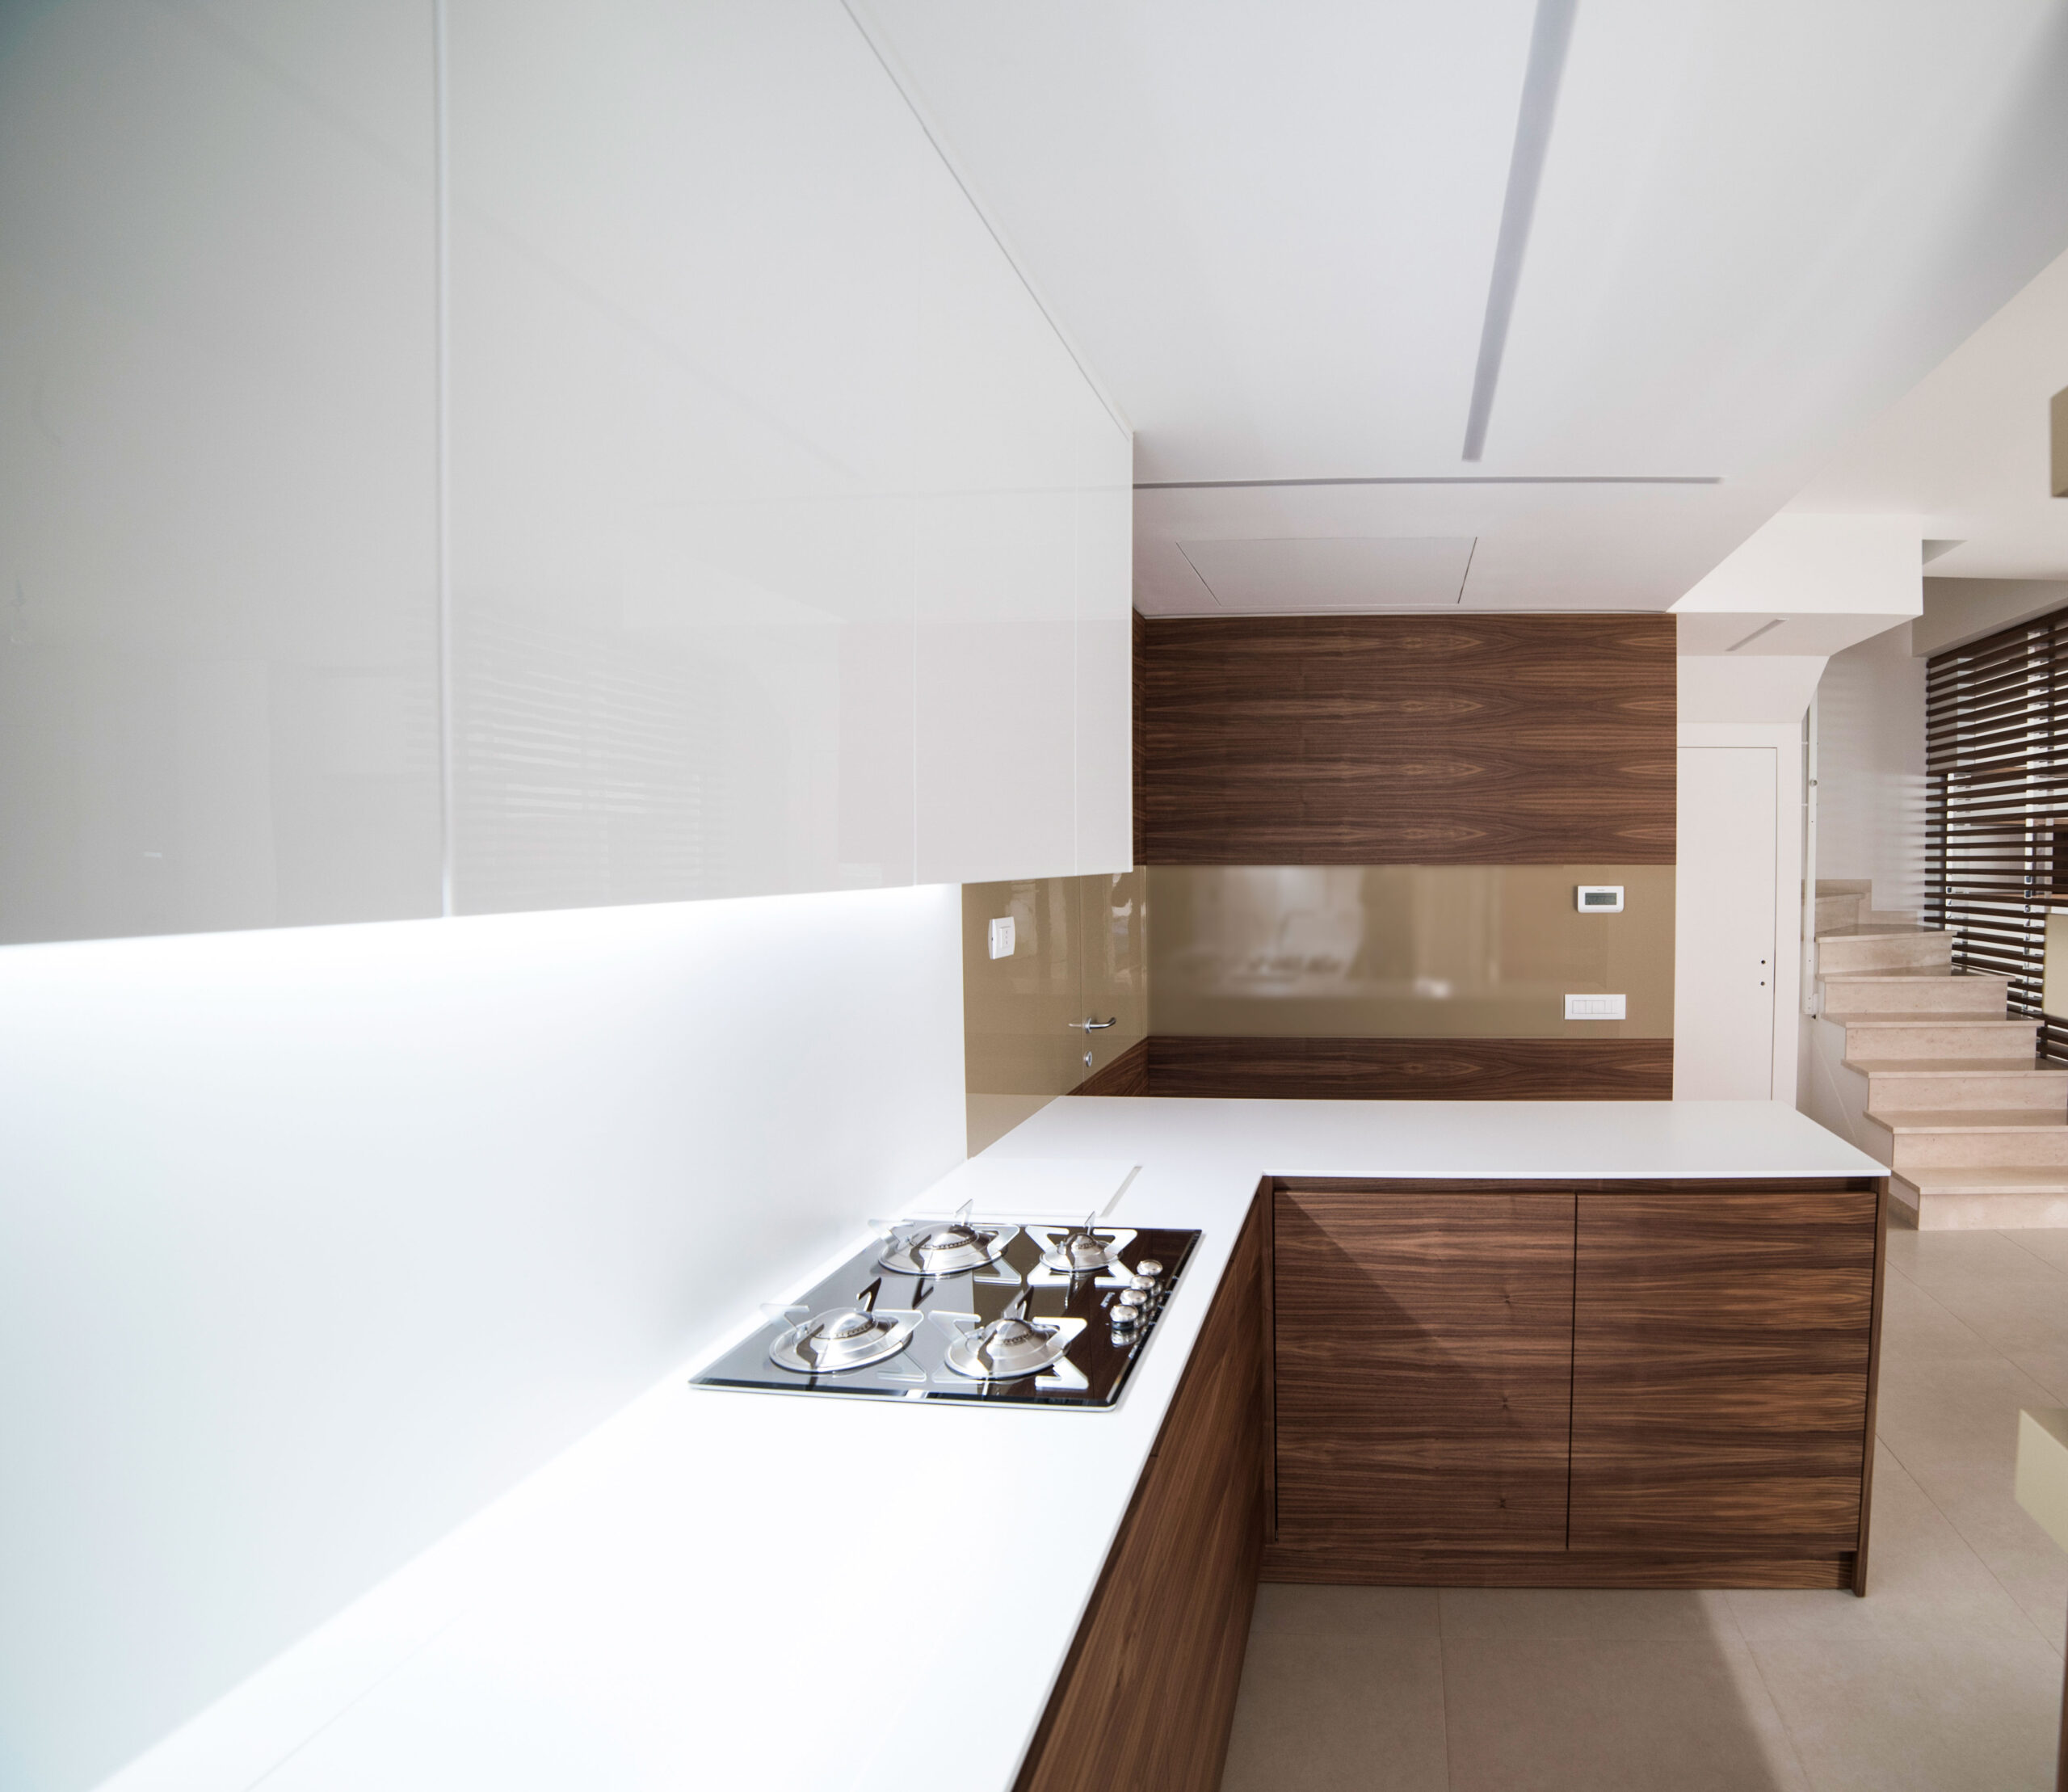 NAPA design kitchen in walnut made in Italy by Disegnopiu